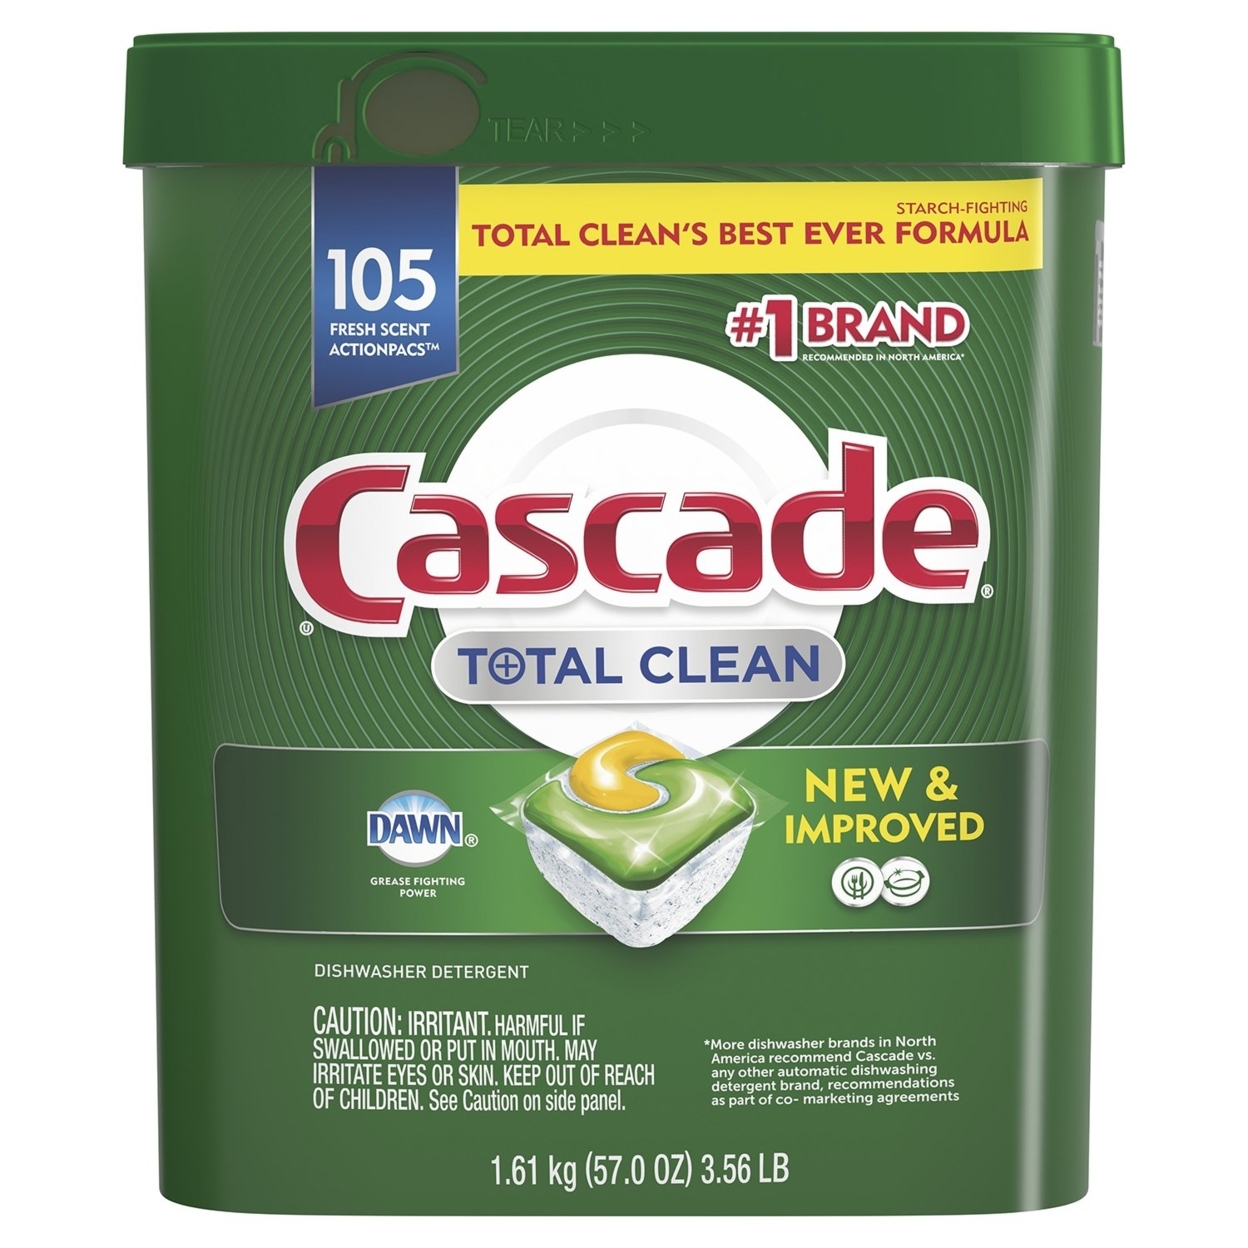 Cascade Total Clean ActionPacs, Dishwasher Detergent, Fresh Scent (105 Count)